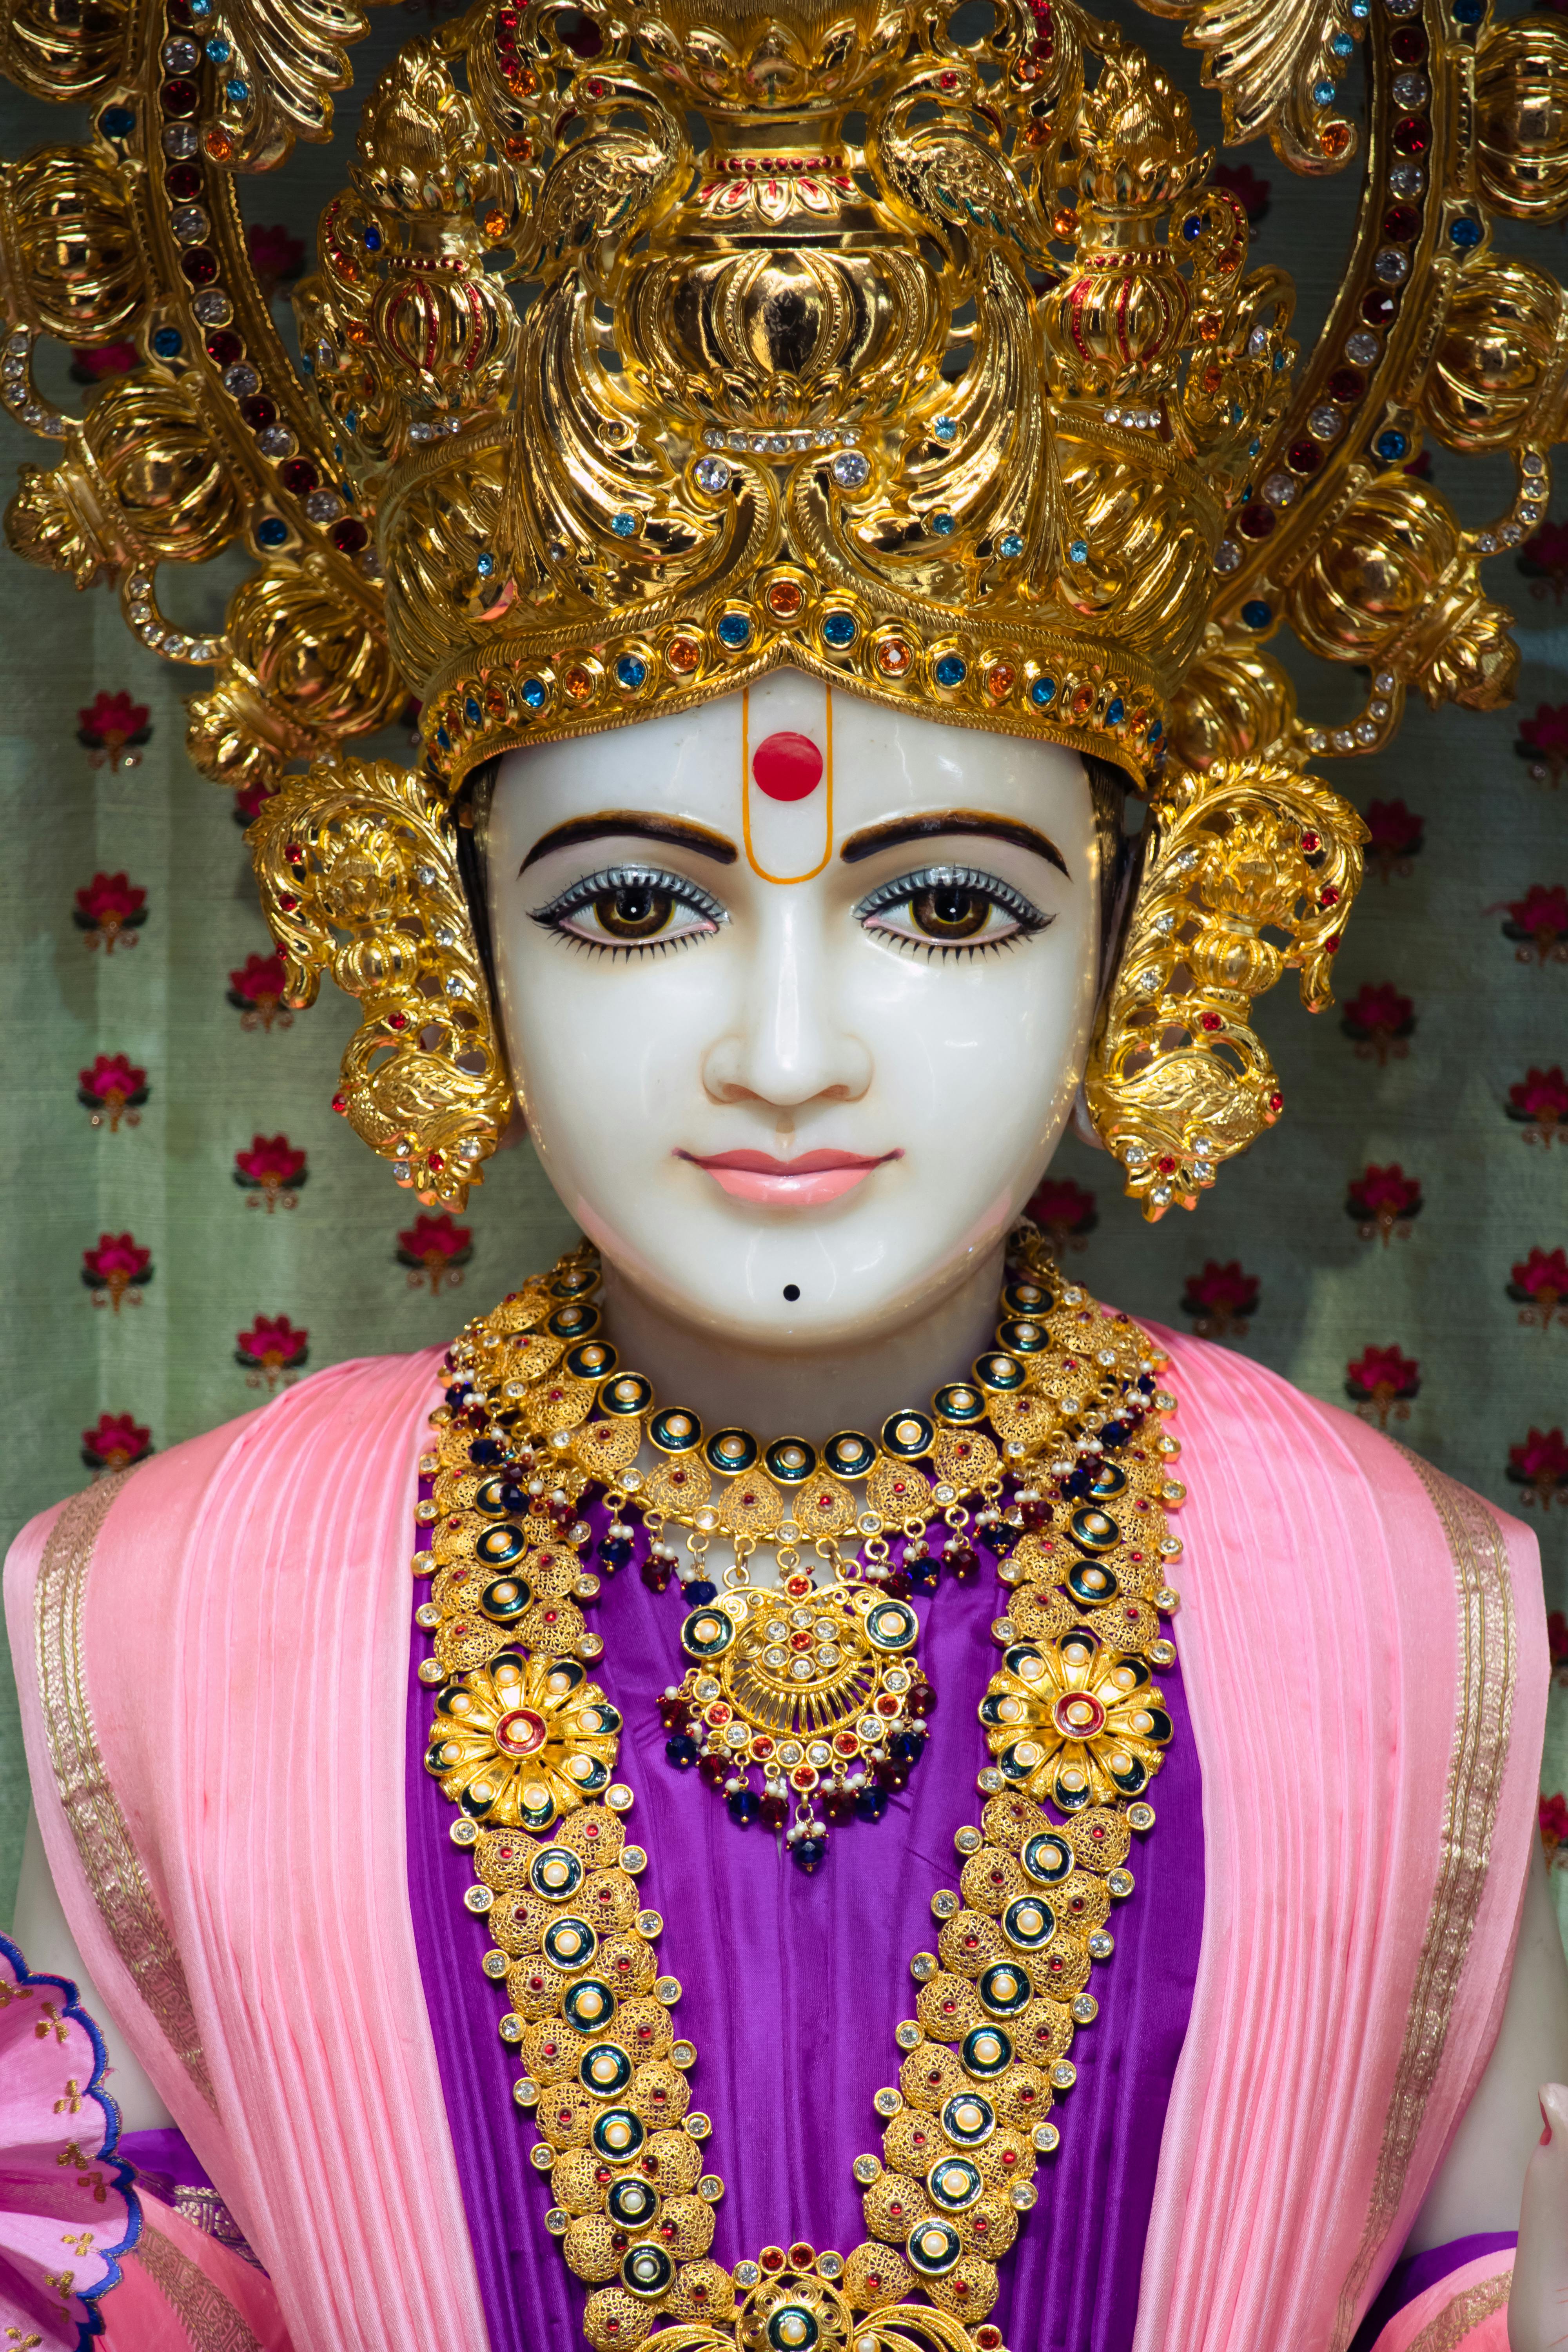 Swaminarayan Wallpapers - Top Những Hình Ảnh Đẹp